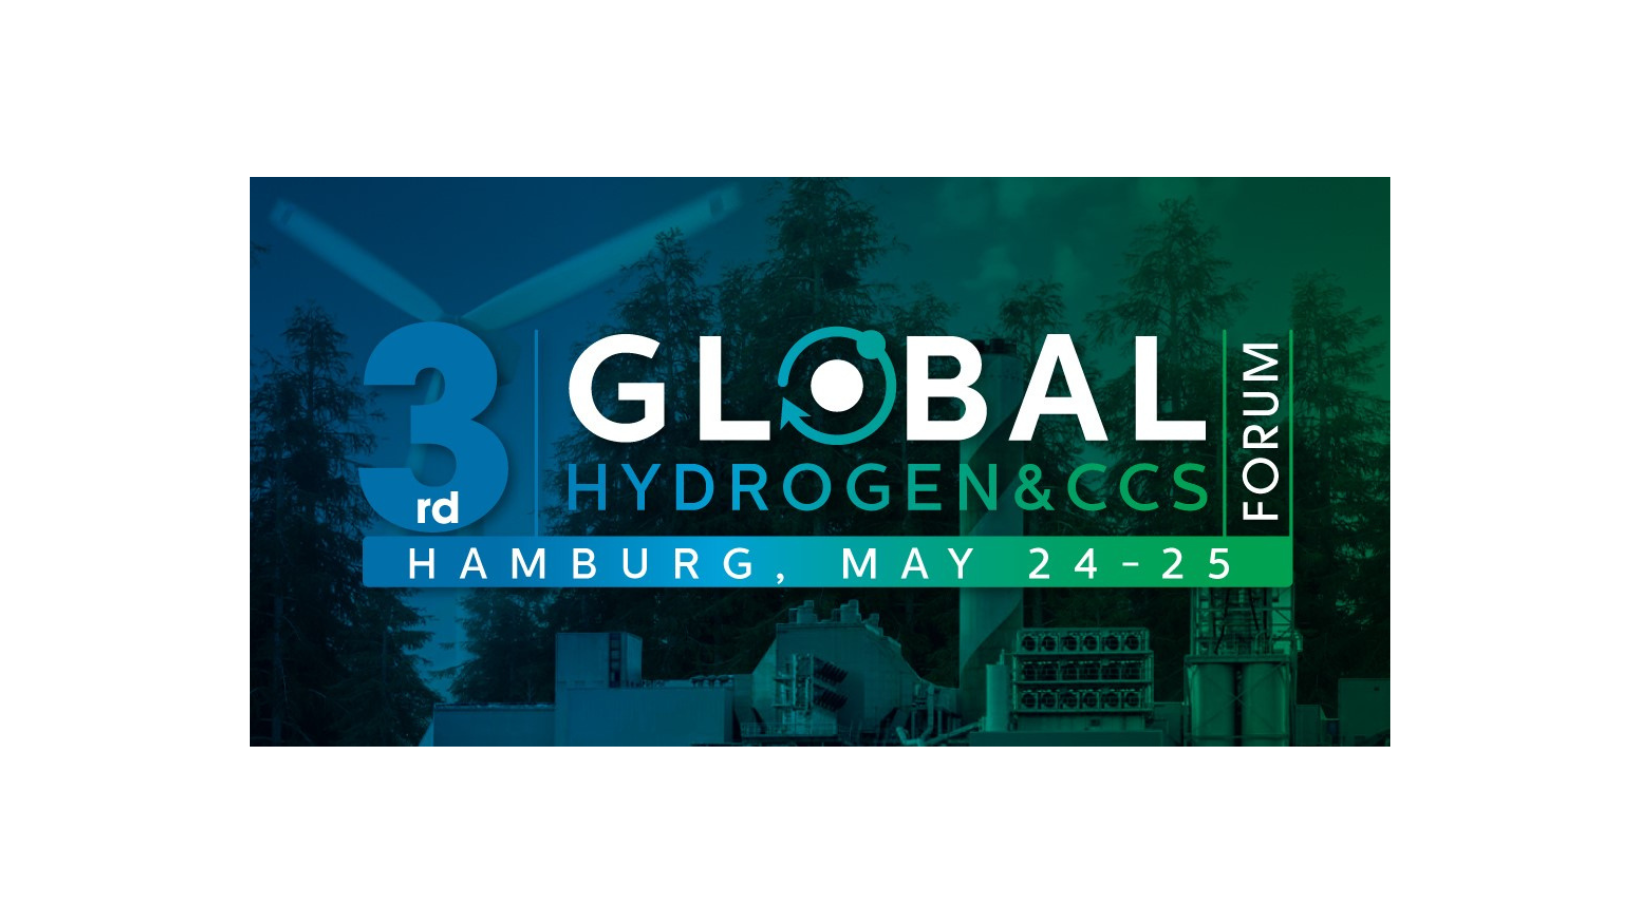 3rd Global Hydrogen & CCS Forum